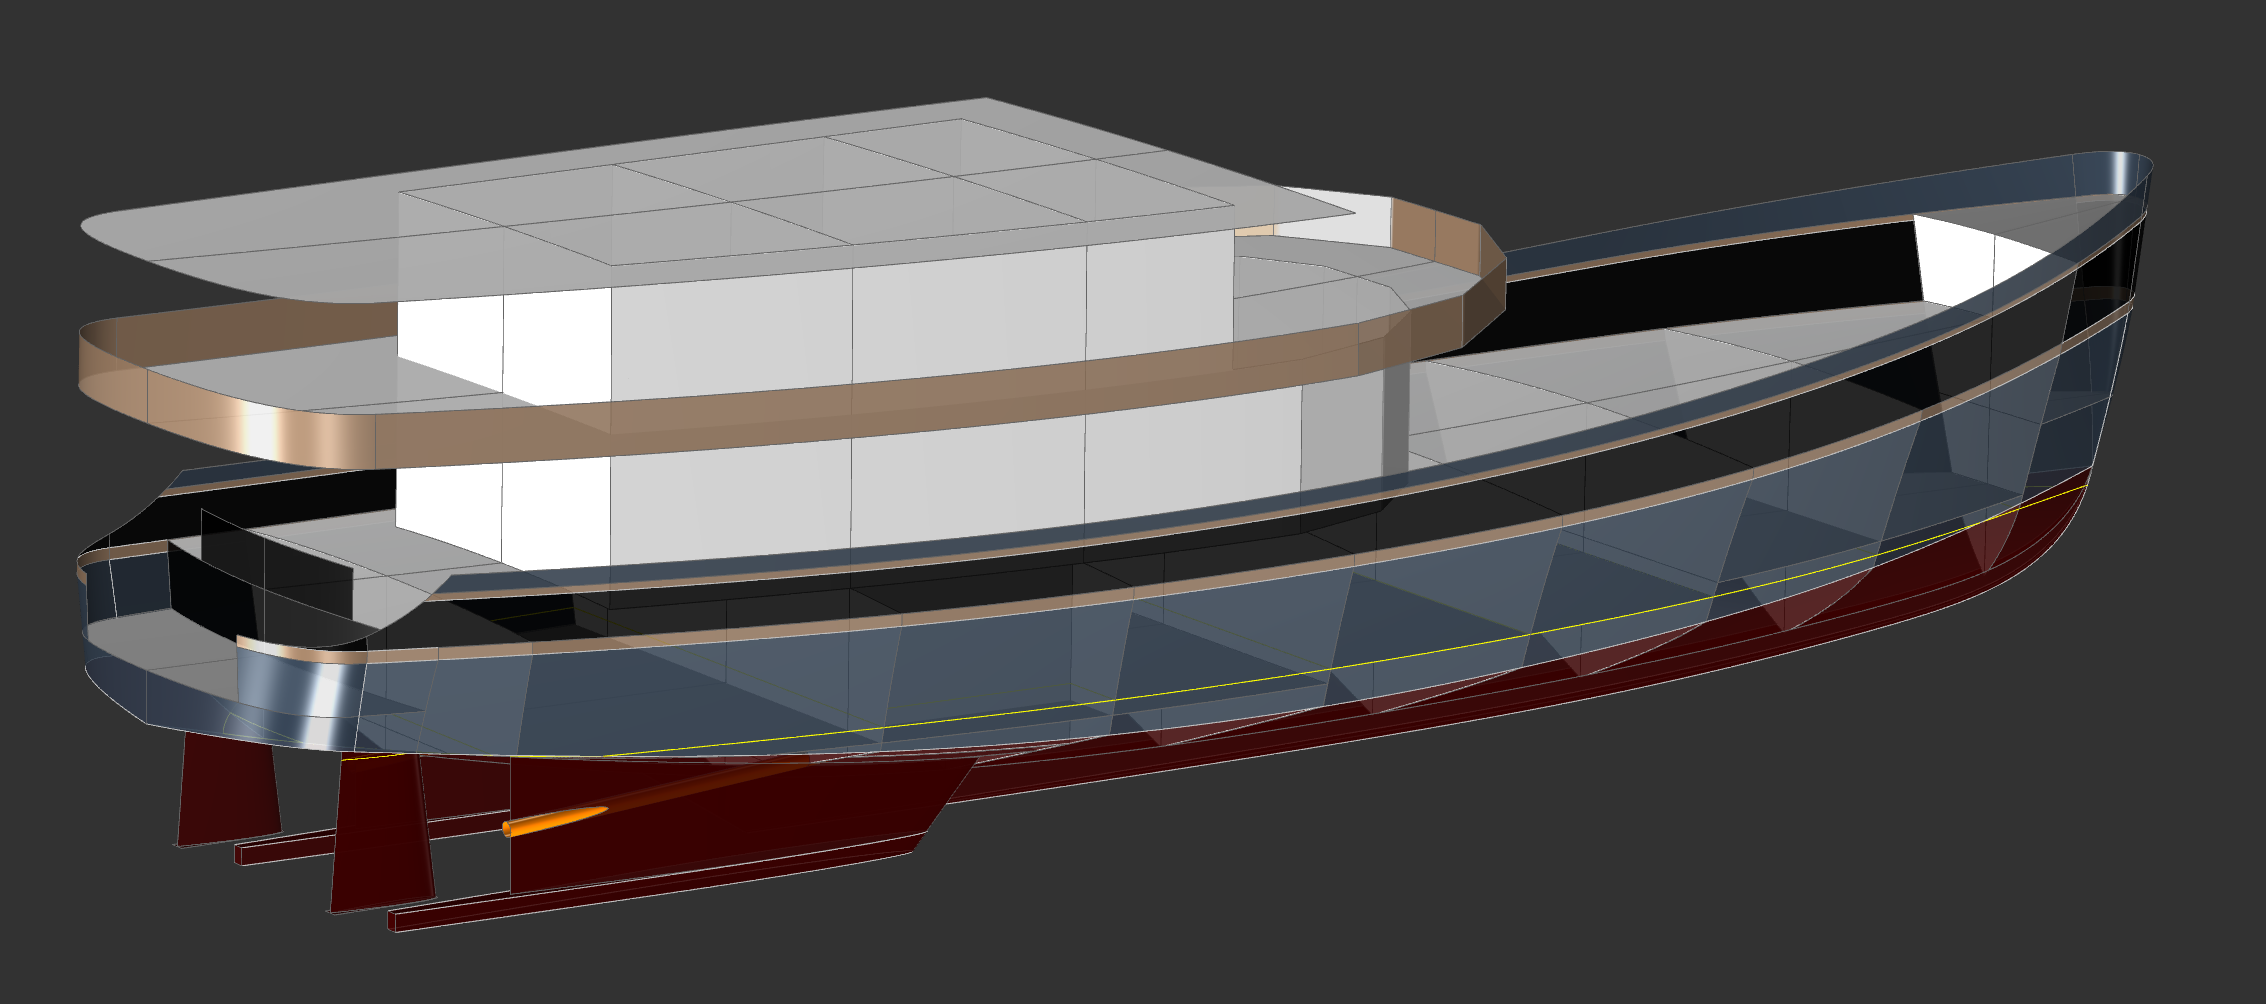 37m Peri Laut - Dive Charter Yacht - Kasten Marine Design, Inc.